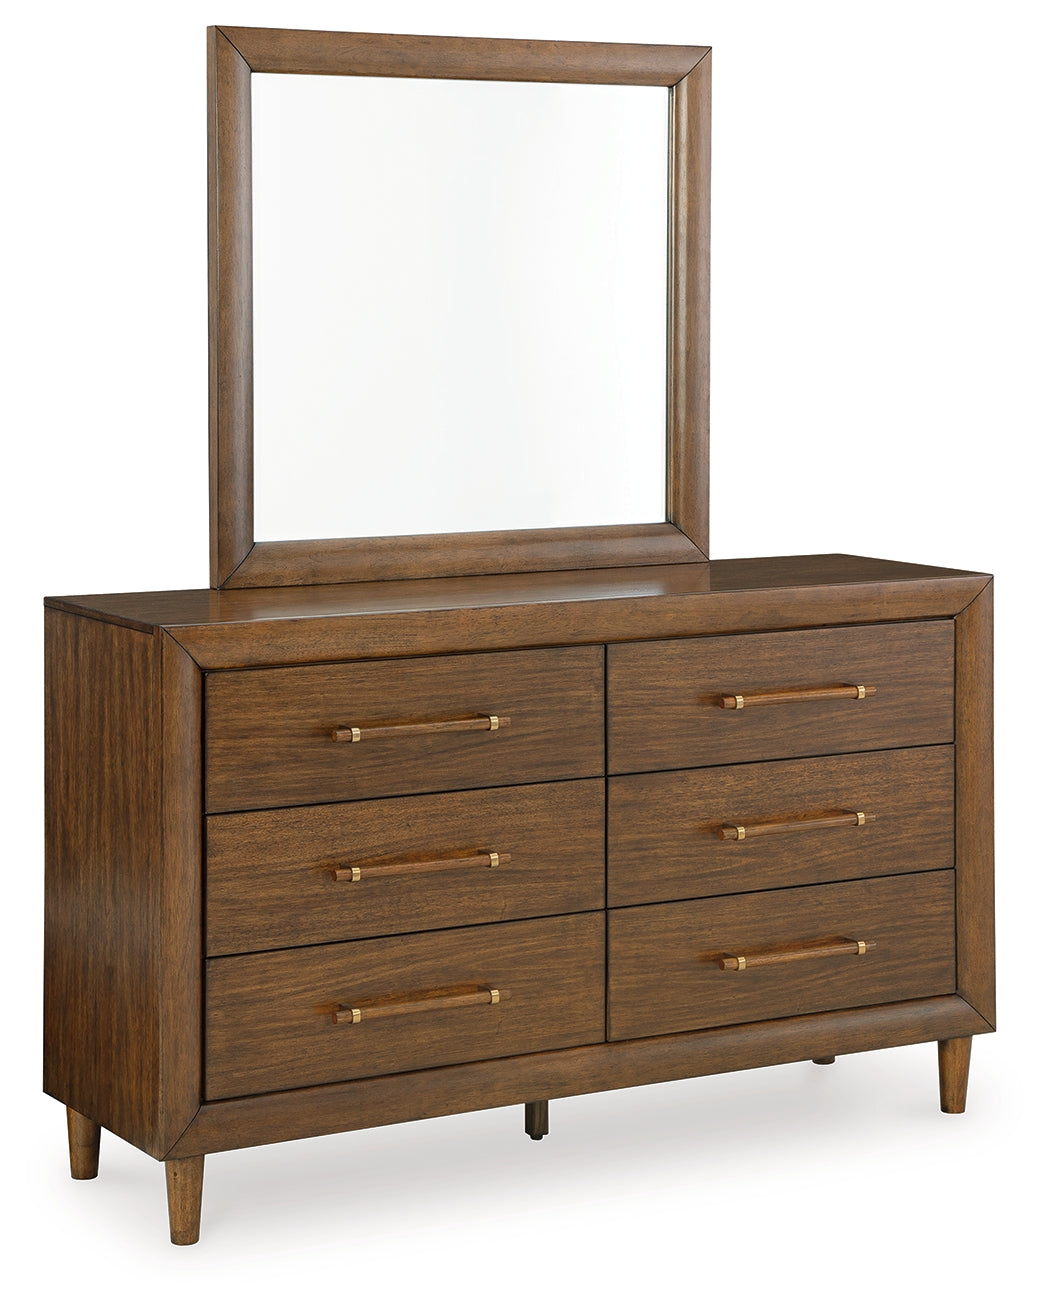 Lyncott King Upholstered Bedroom Set with Dresser and Mirror